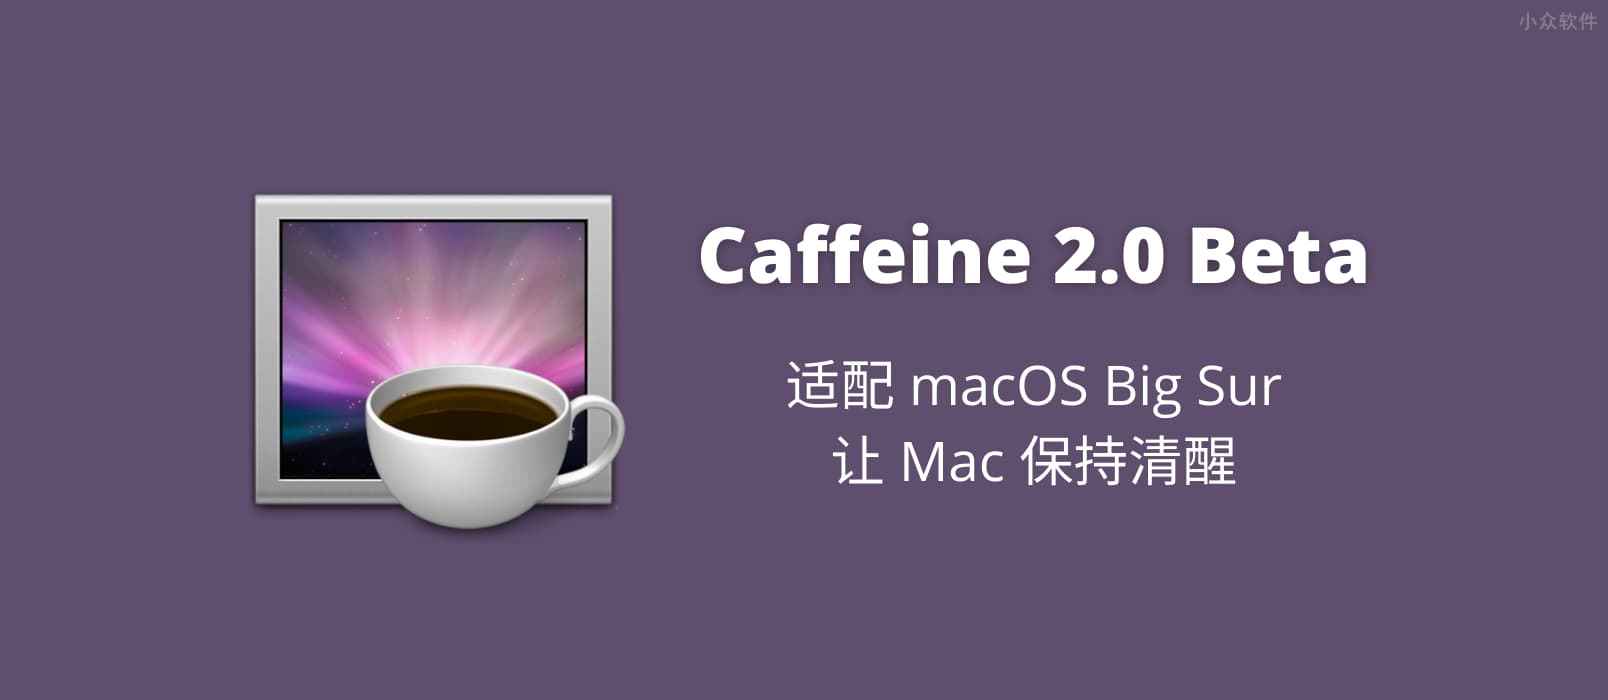 Caffeine 2.0 Beta - 适配 macOS Big Sur 的免休眠工具，让你的 Mac 暂时保持清醒